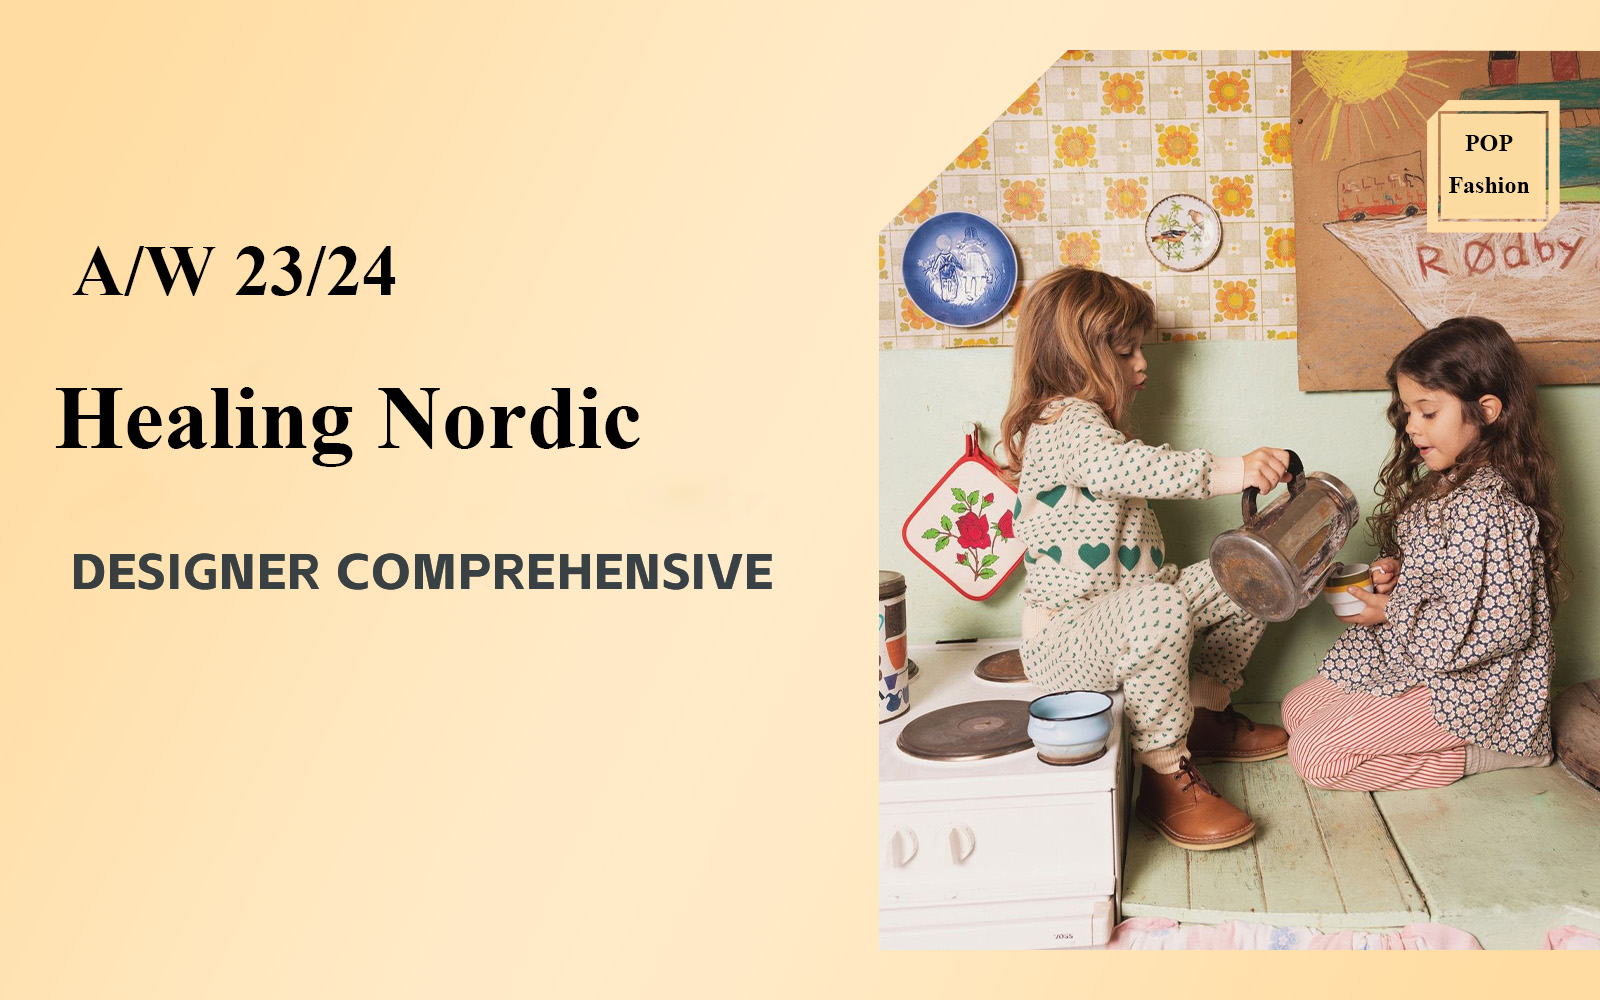 Healing Nordic Style -- The Comprehensive Analysis of Danish Kidswear Designer Brand